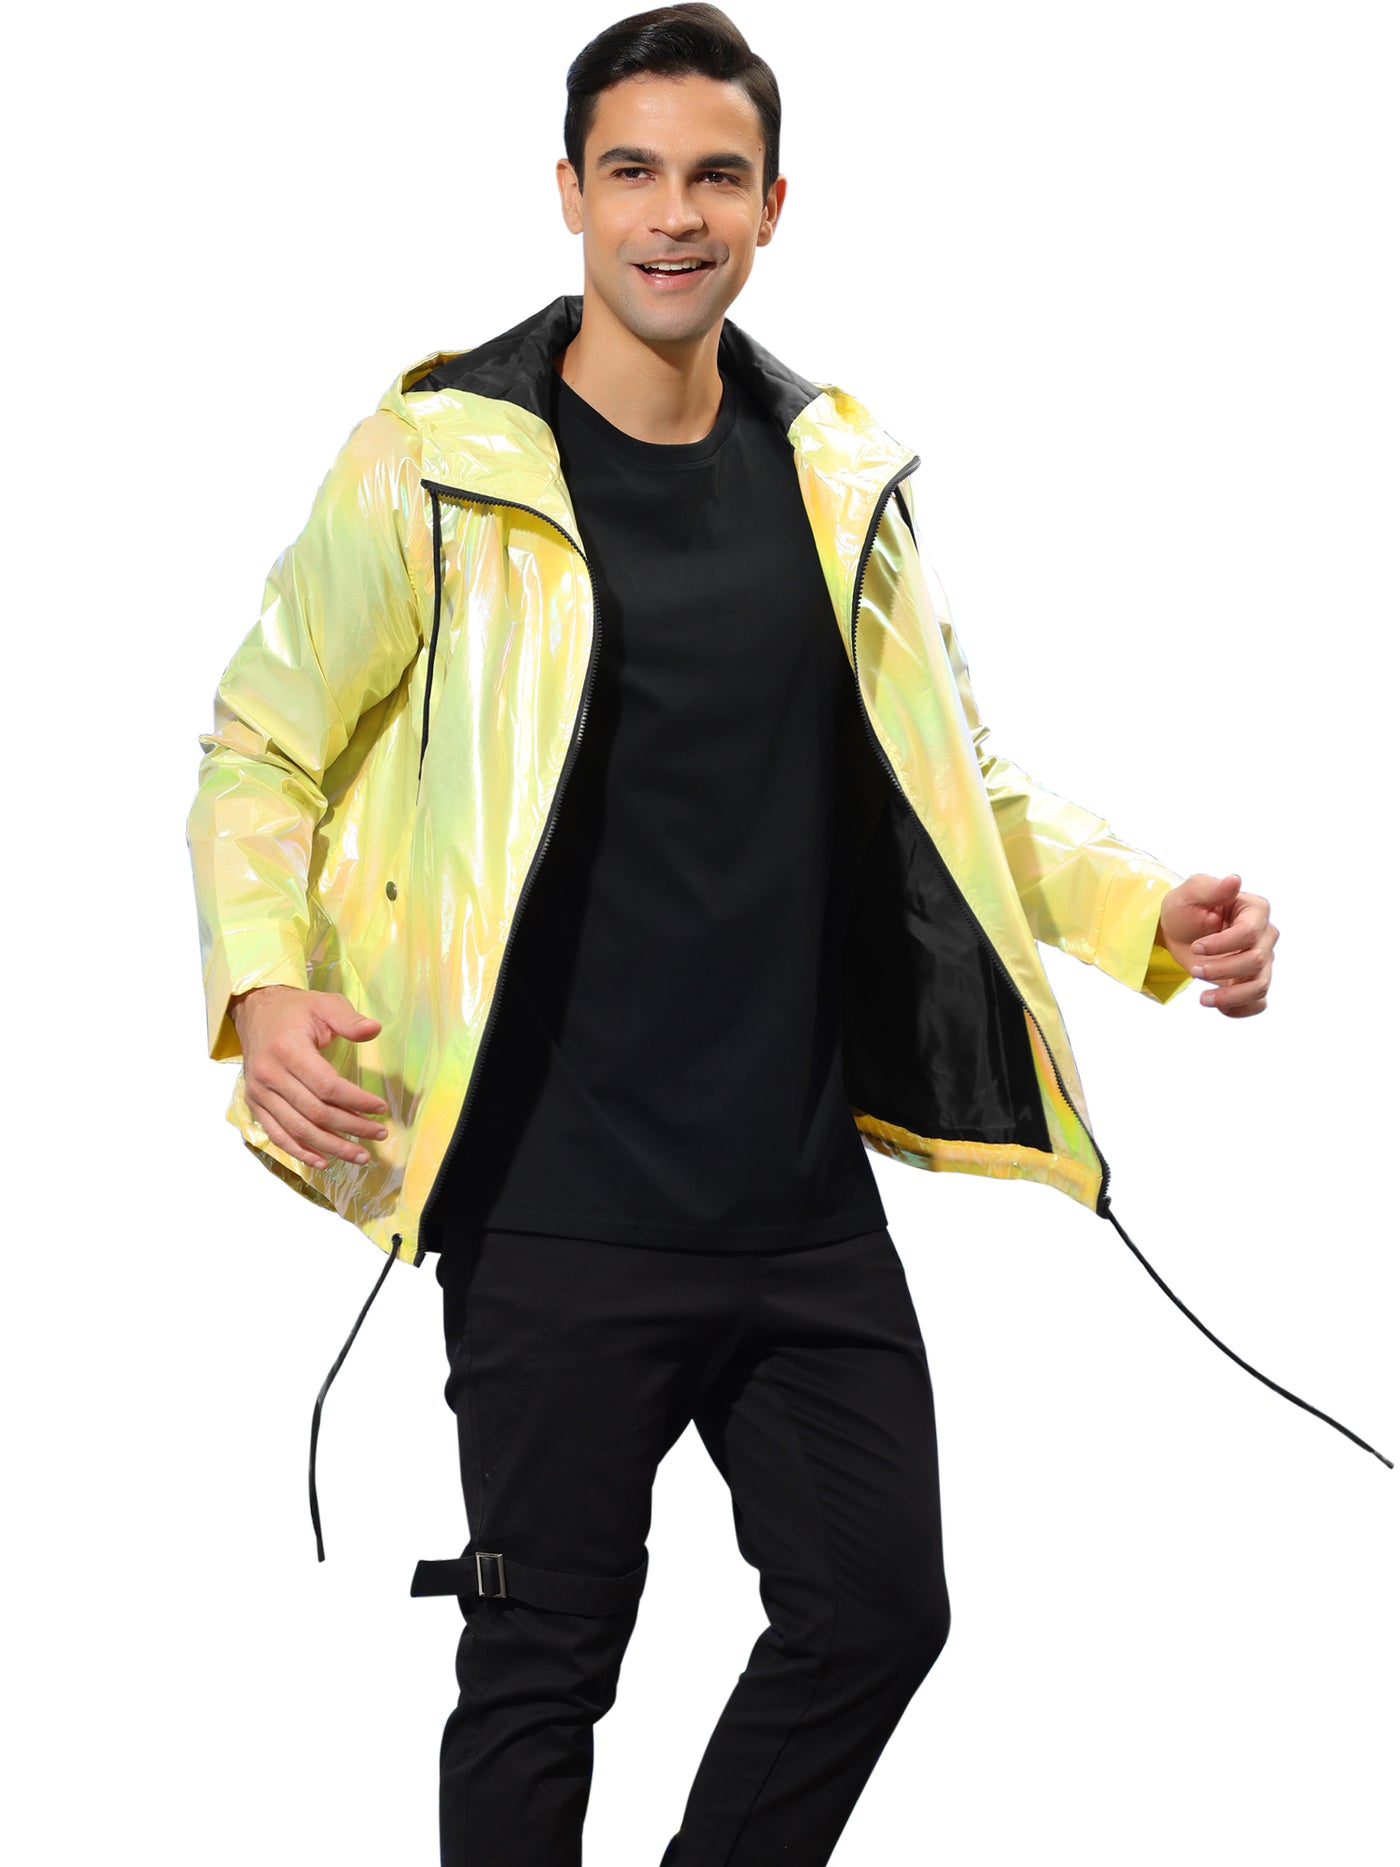 Bublédon Men's Holographic Jacket Lightweight Zipper Metallic Shiny Hoodie Windbreaker